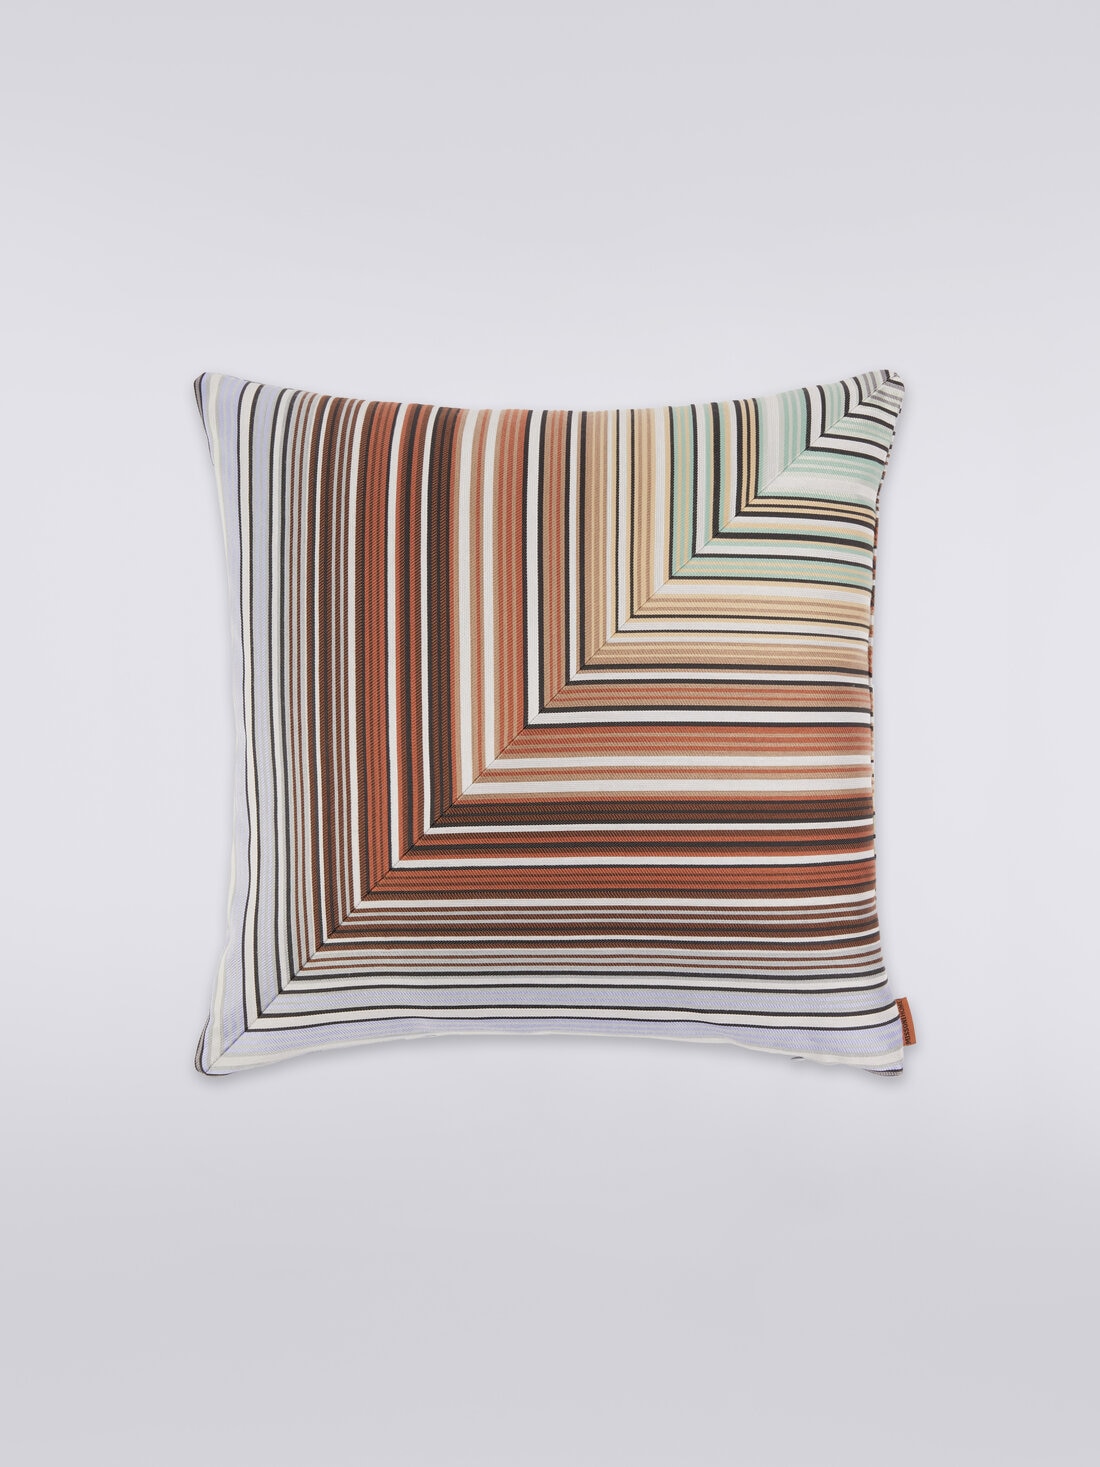 Brighton PW 40x40 cm cushion, Multicoloured  - 8051275581154 - 0